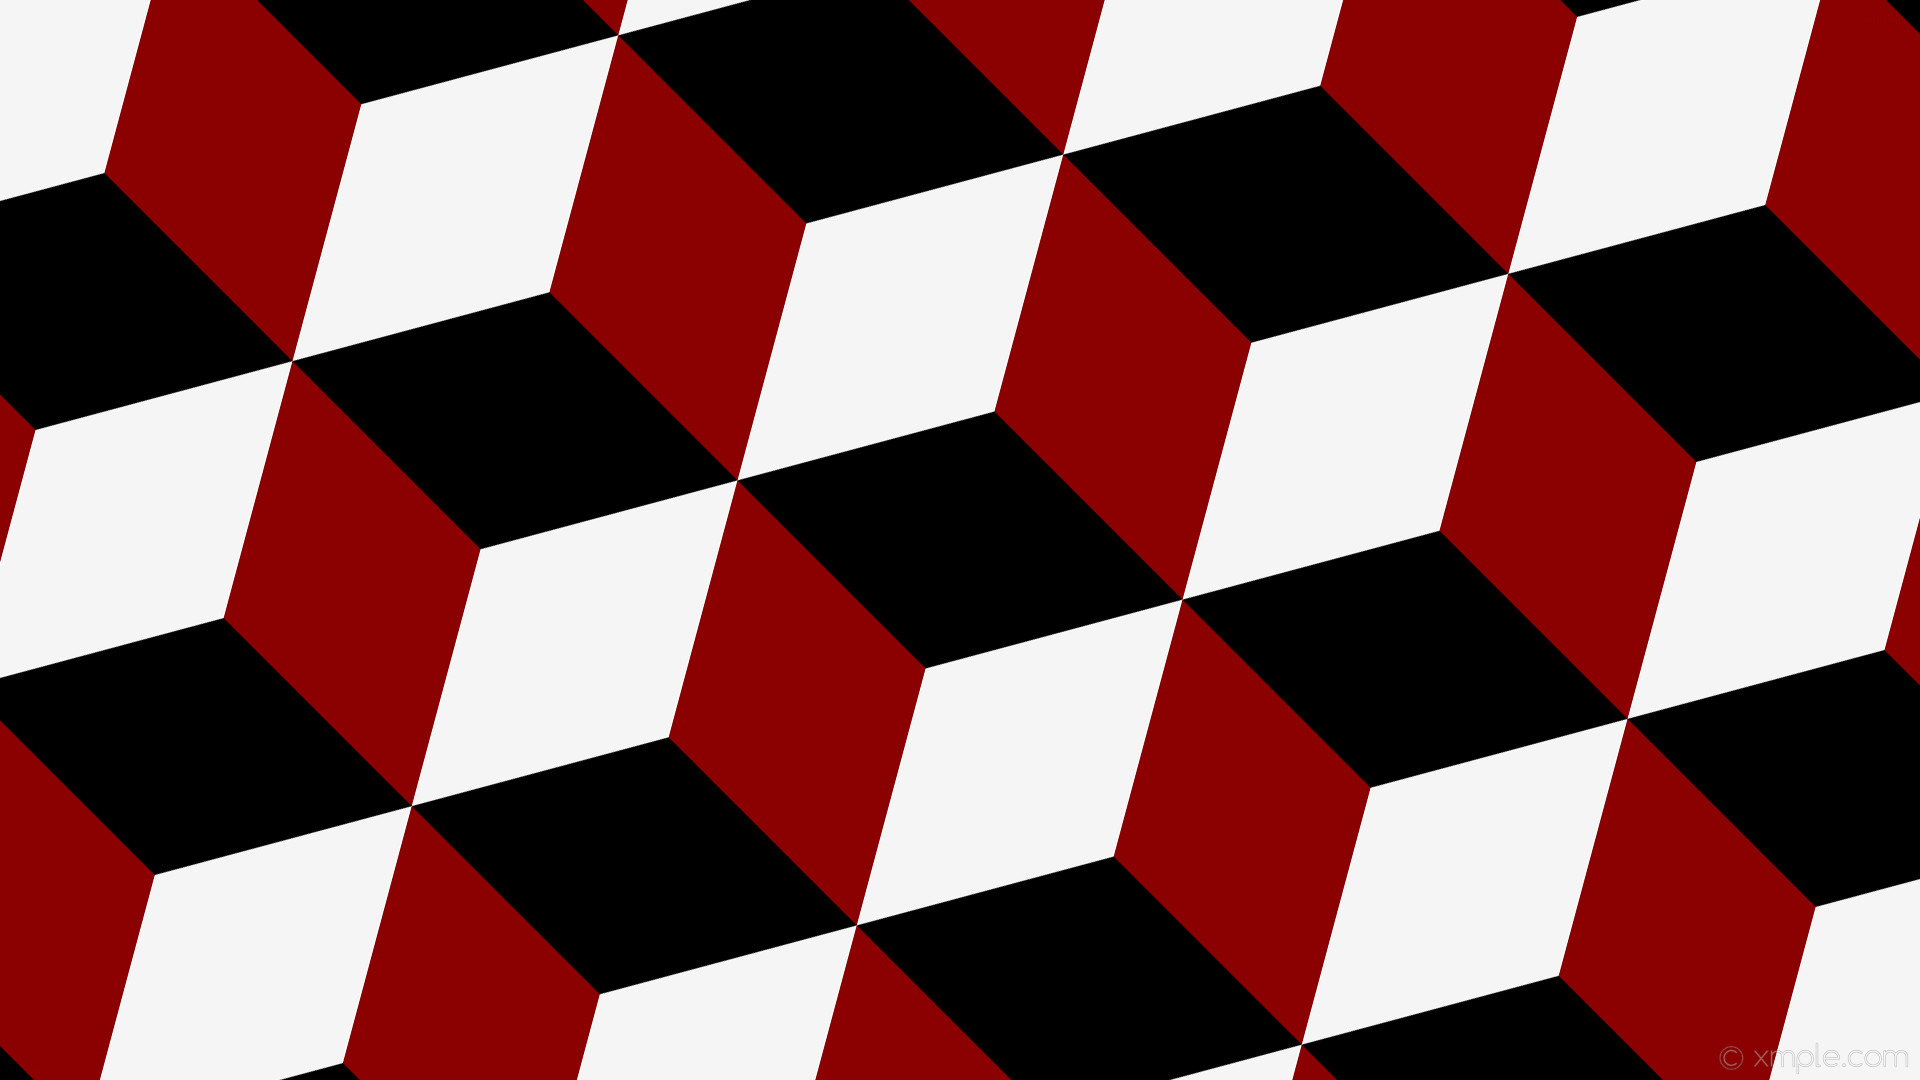 1920x1080 wallpaper red 3d cubes white black dark red white smoke #000000 #8b0000  #f5f5f5